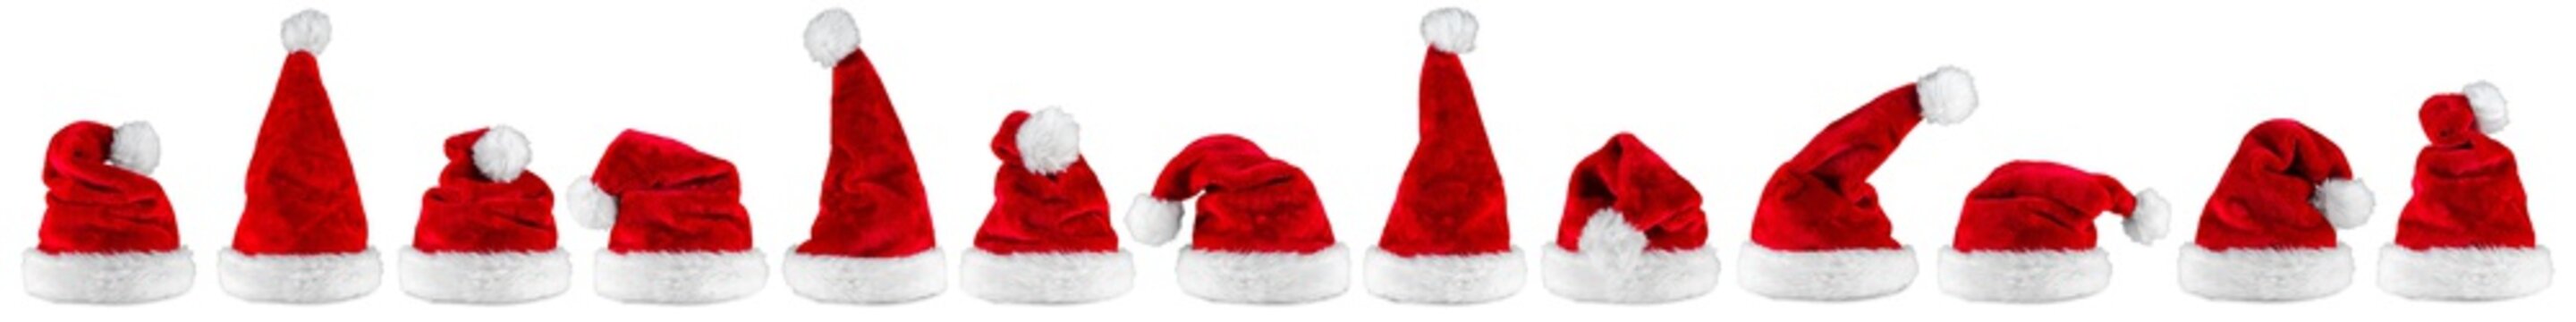 red white christmas santa hats  luxury high quality plush row panorama isolated on white background / Weihnachtsmützen Nikolausmützen Reihe Set  isoliert